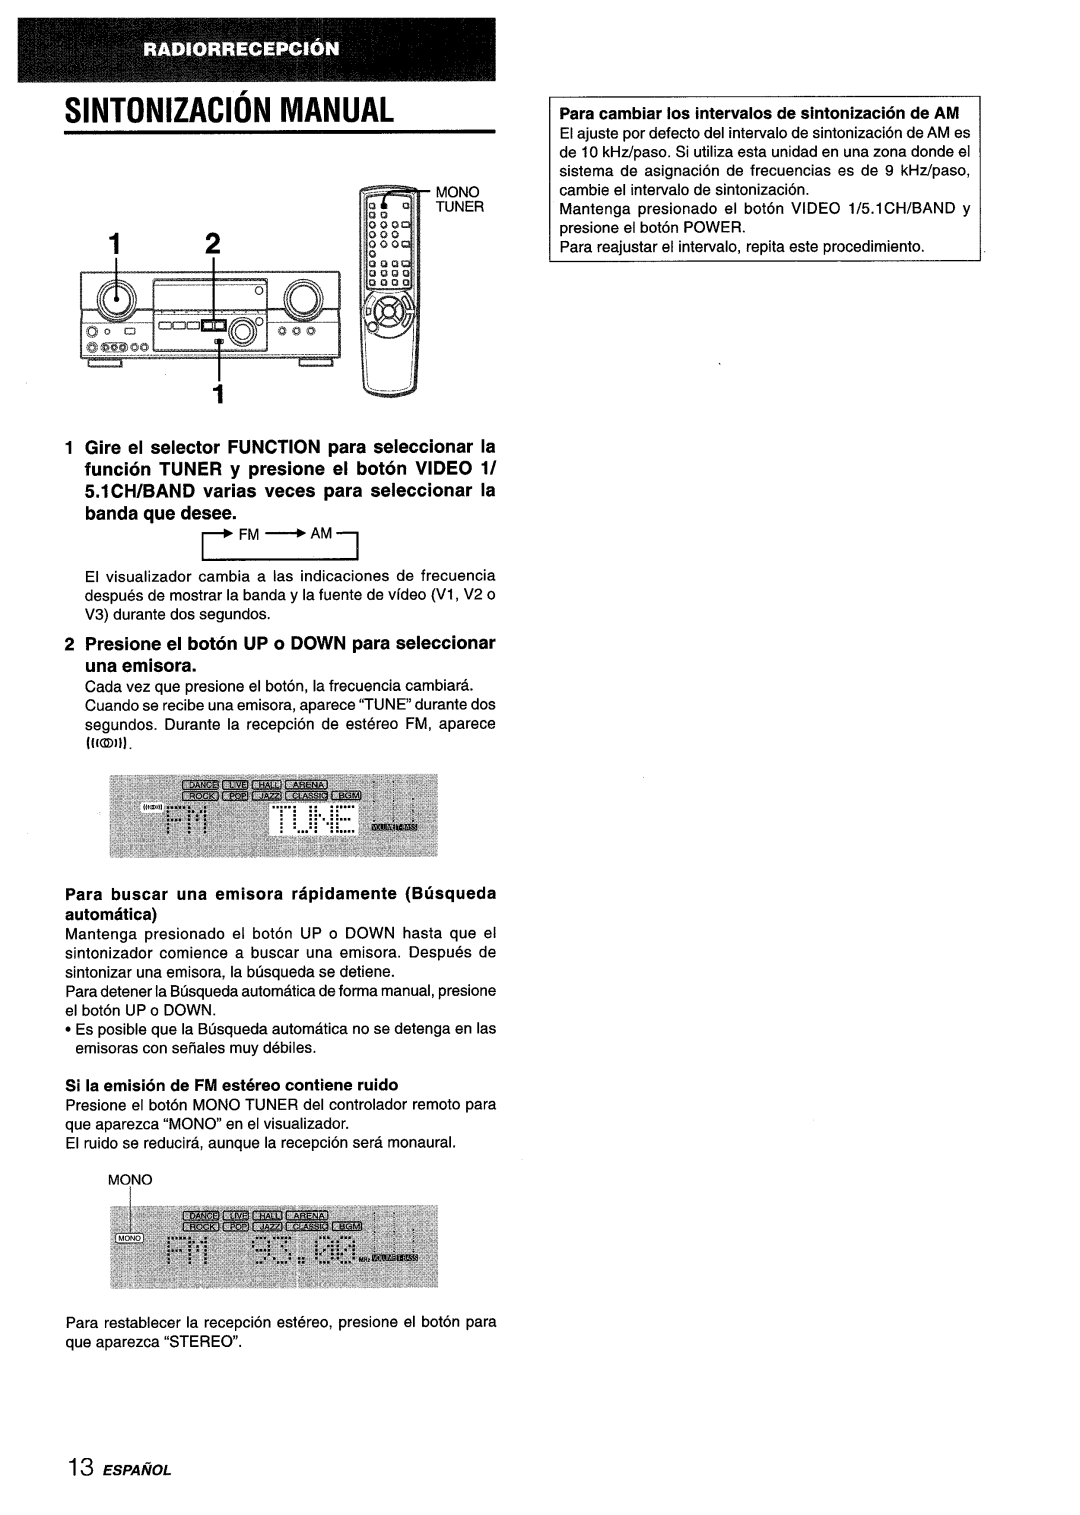 Aiwa AV-D35 manual Sintonizacion Manual, 5.1 CH/BAND varias veces para seleccionar la banda que desee ~, m RR 